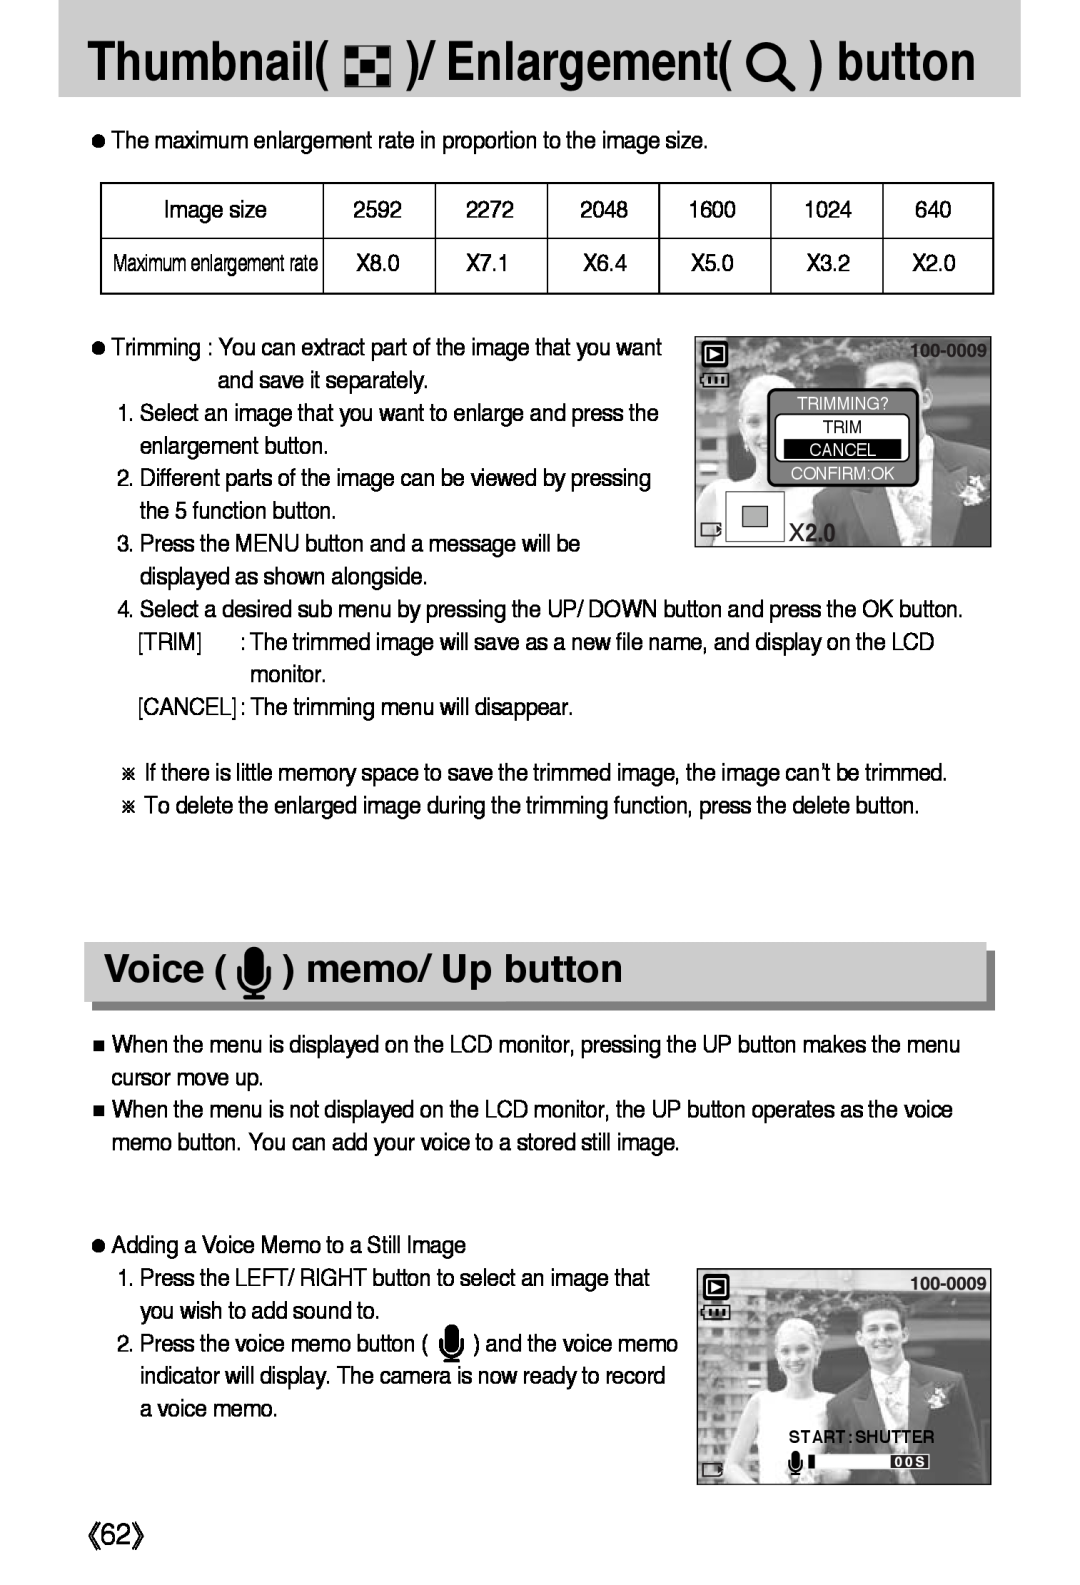 Samsung L50 user manual Voice memo/ Up button, 《62》, Thumbnail / Enlargement button 